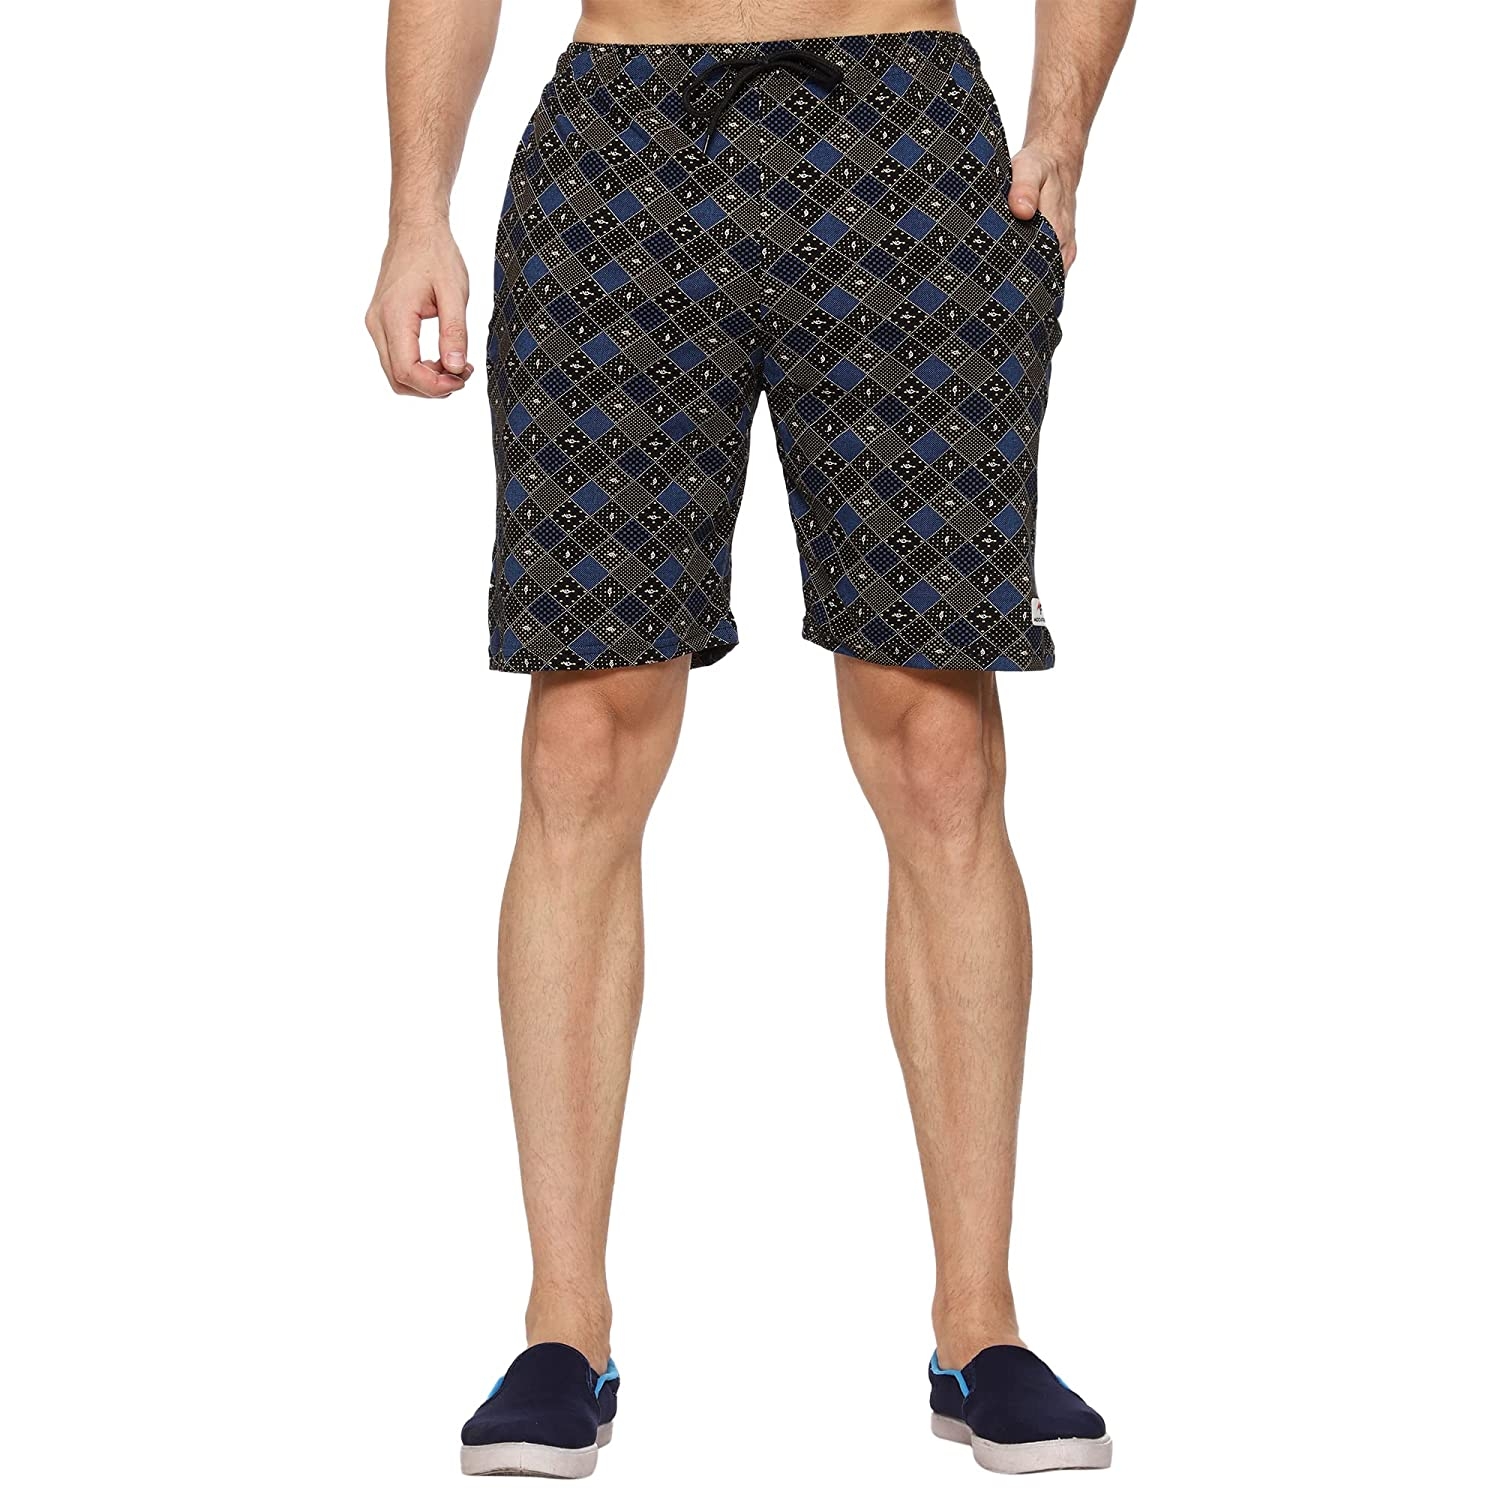 Moovfree Mens Cotton Bermuda Printed Casual Shorts Regular Fit Lounge Shorts with Zip Pockets, Blue and Brown Dots